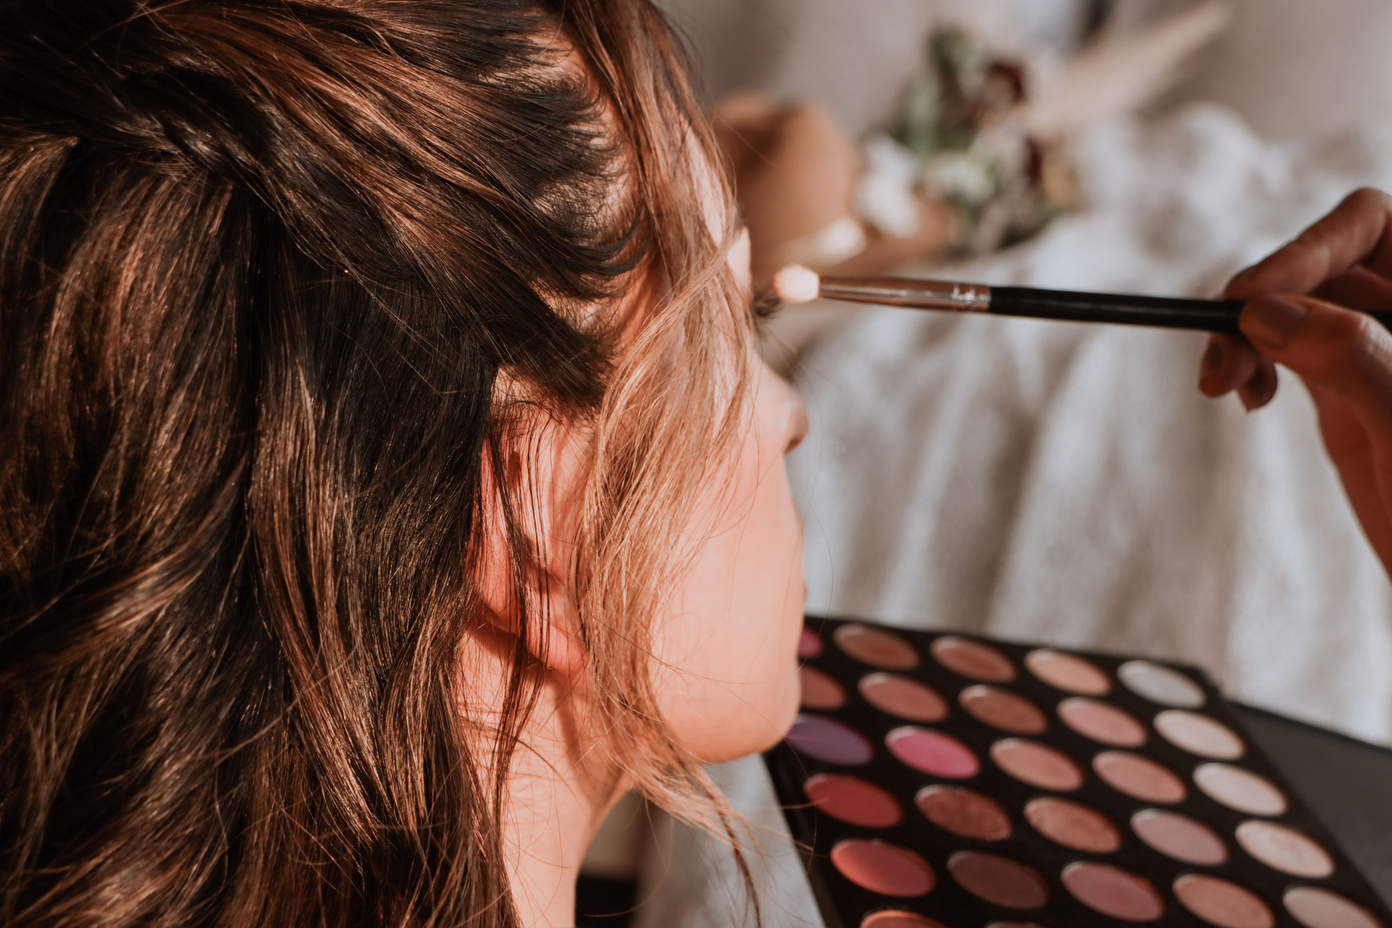 Makeup Artist Applying Makeup on Bride's Face